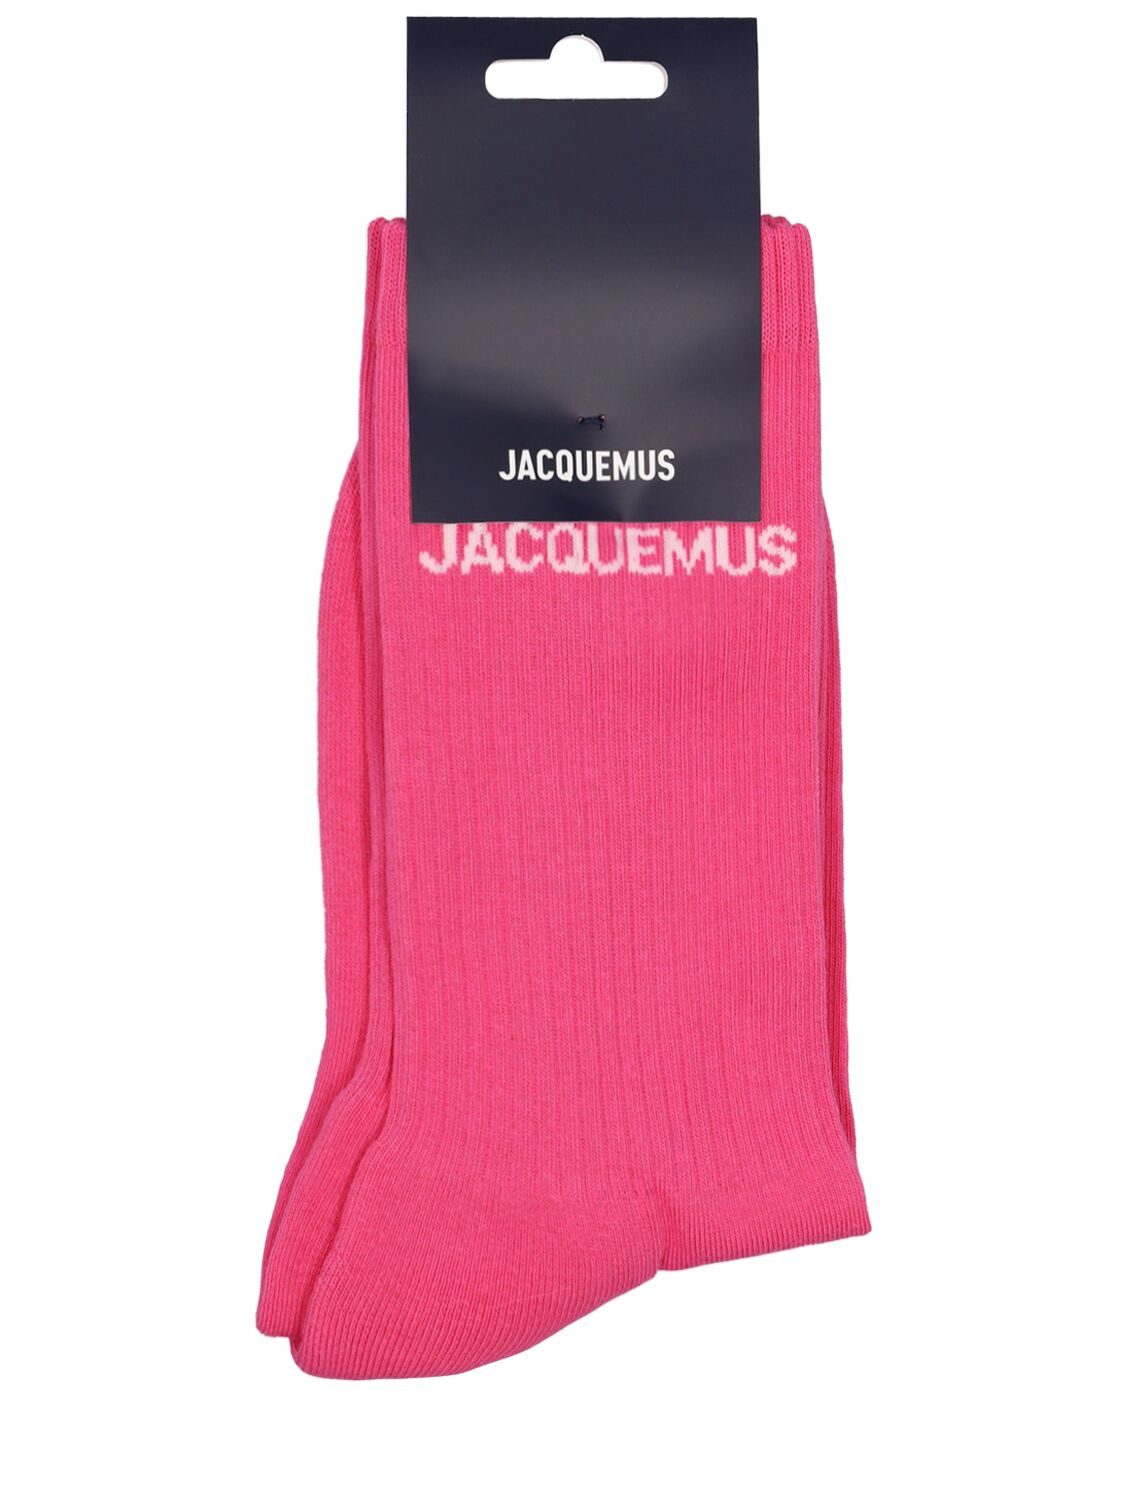 Jacquemus Les Chaussettes Cotton Blend Socks In Dark Pink